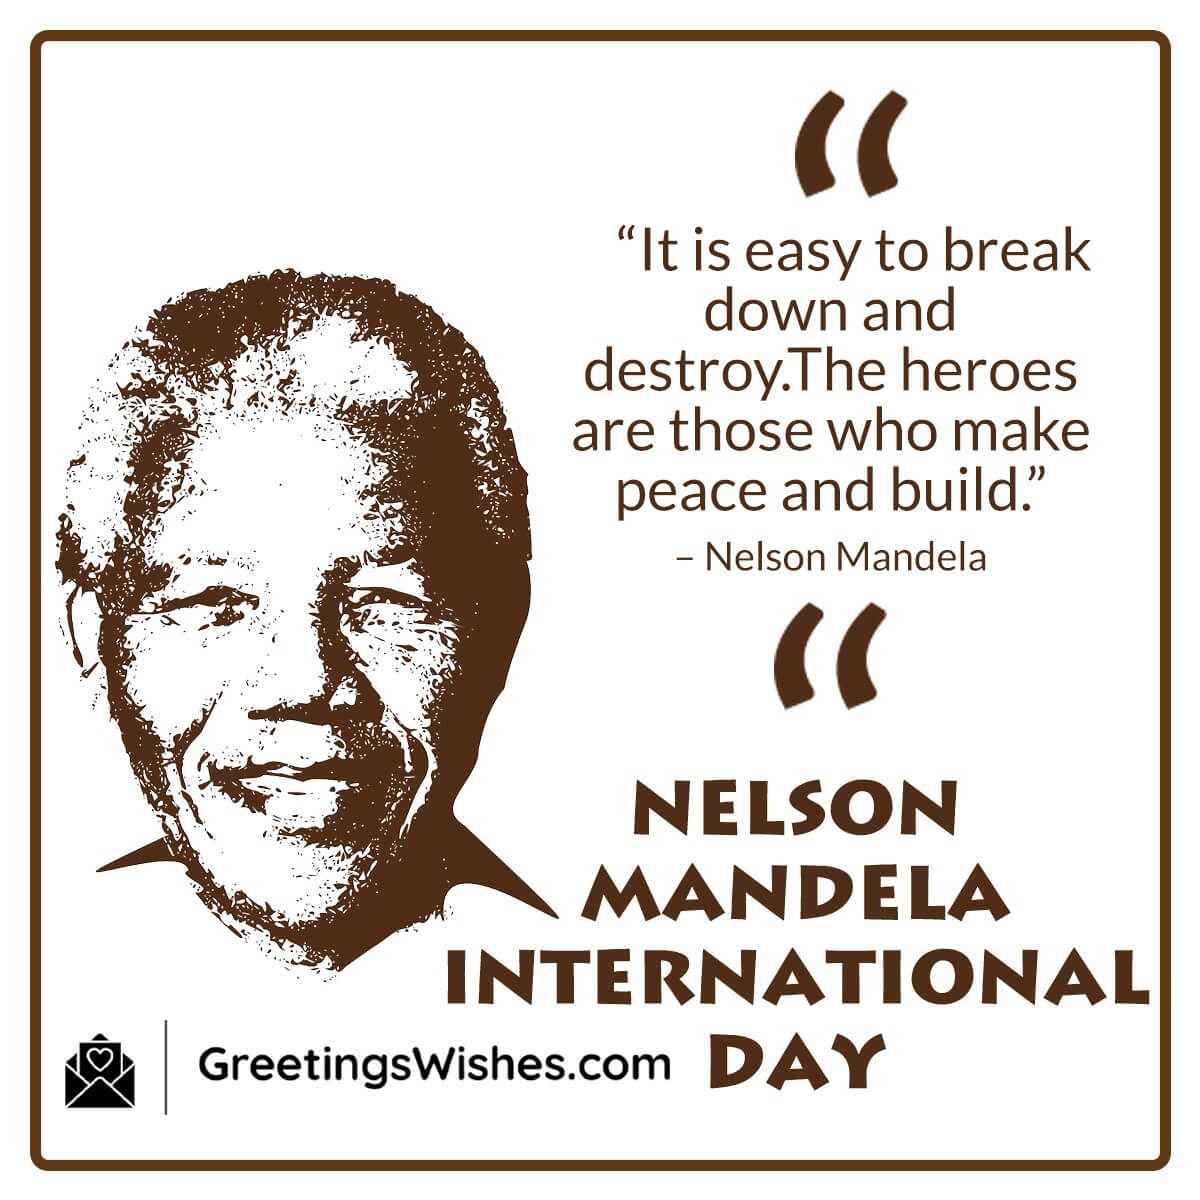 Nelson Mandela International Day Quote